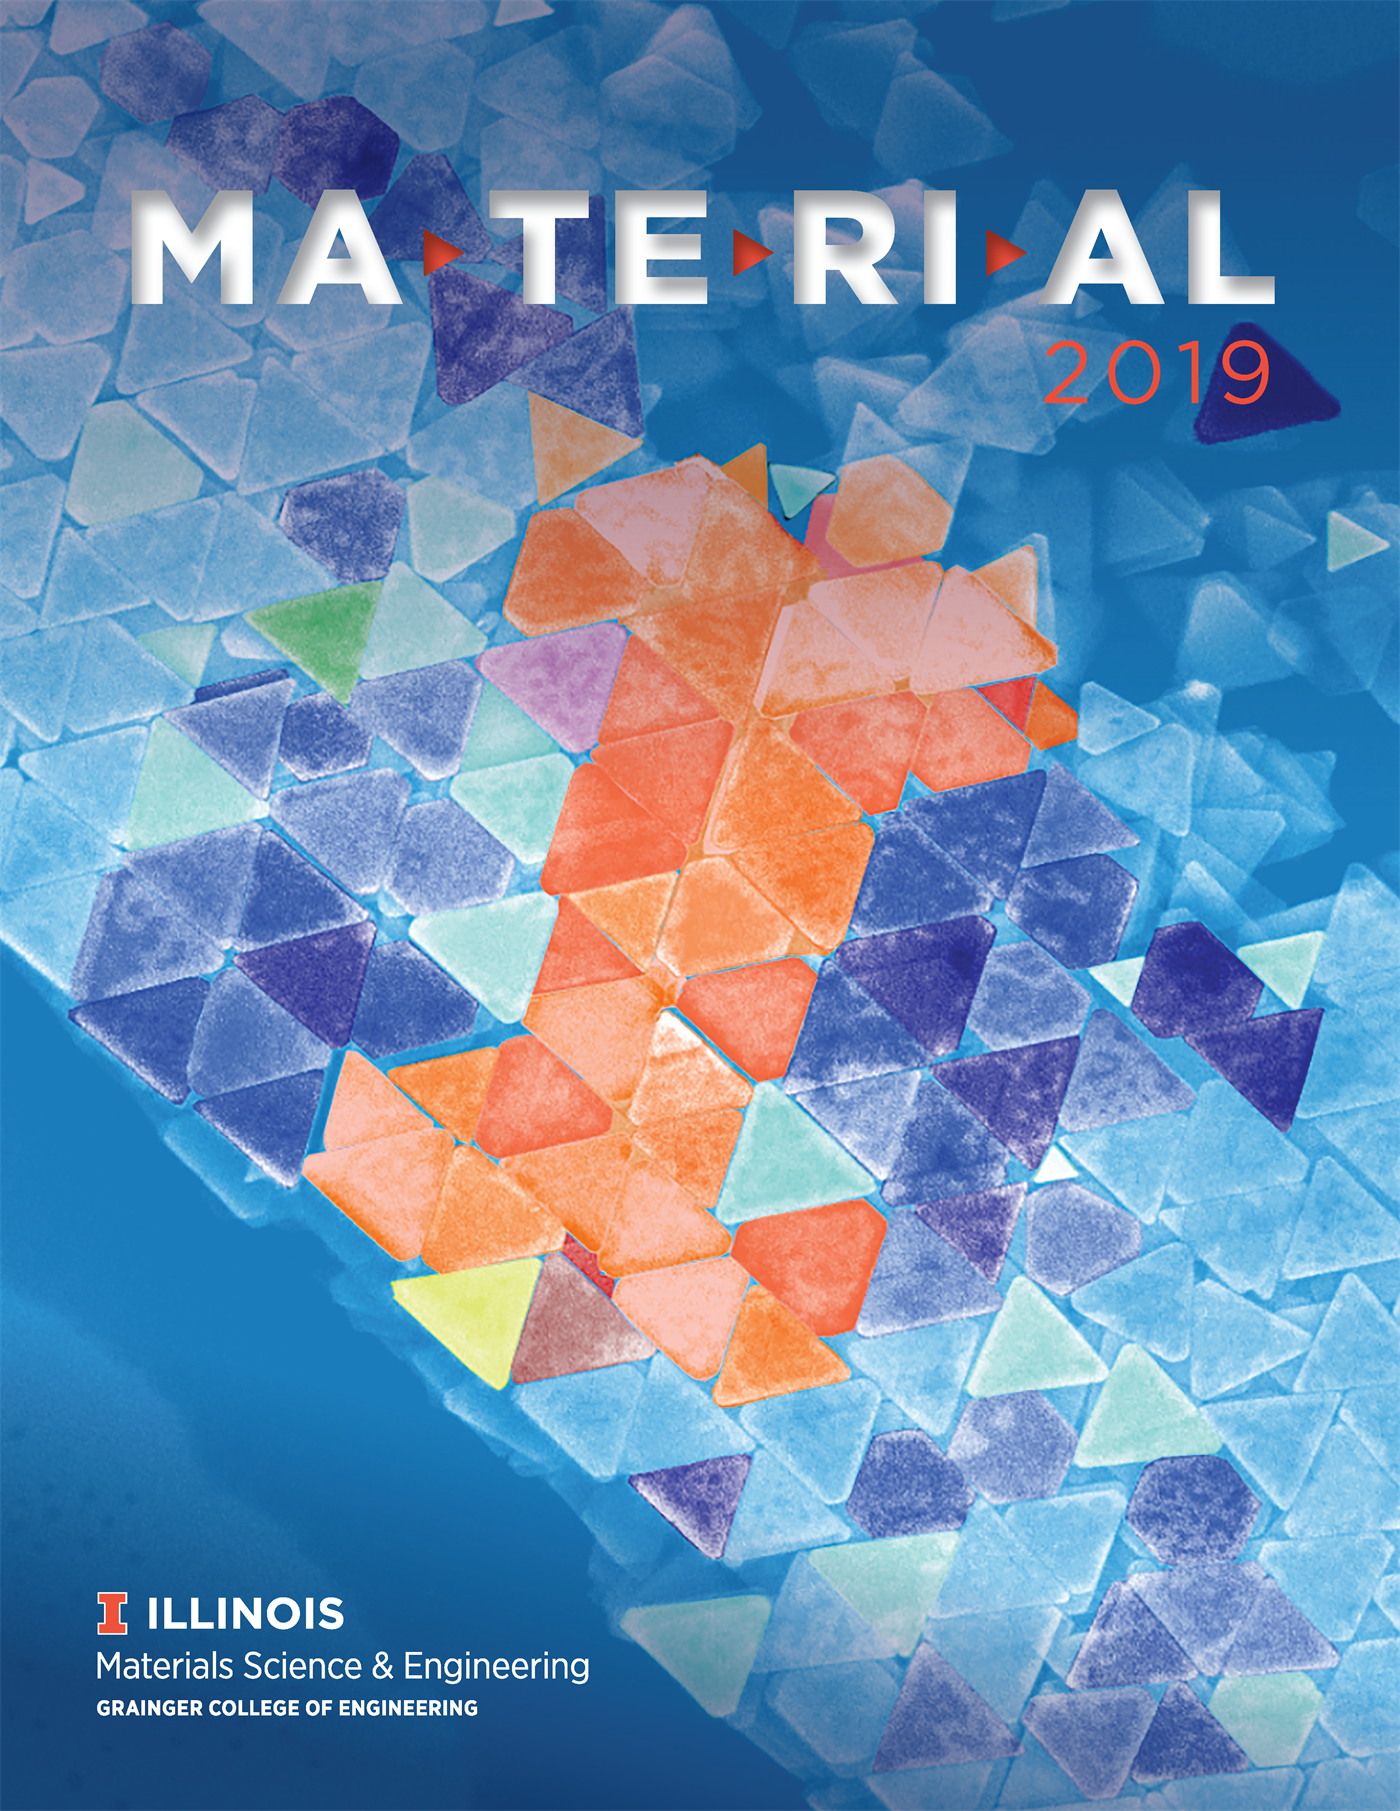 2019 Material Magazine Cover